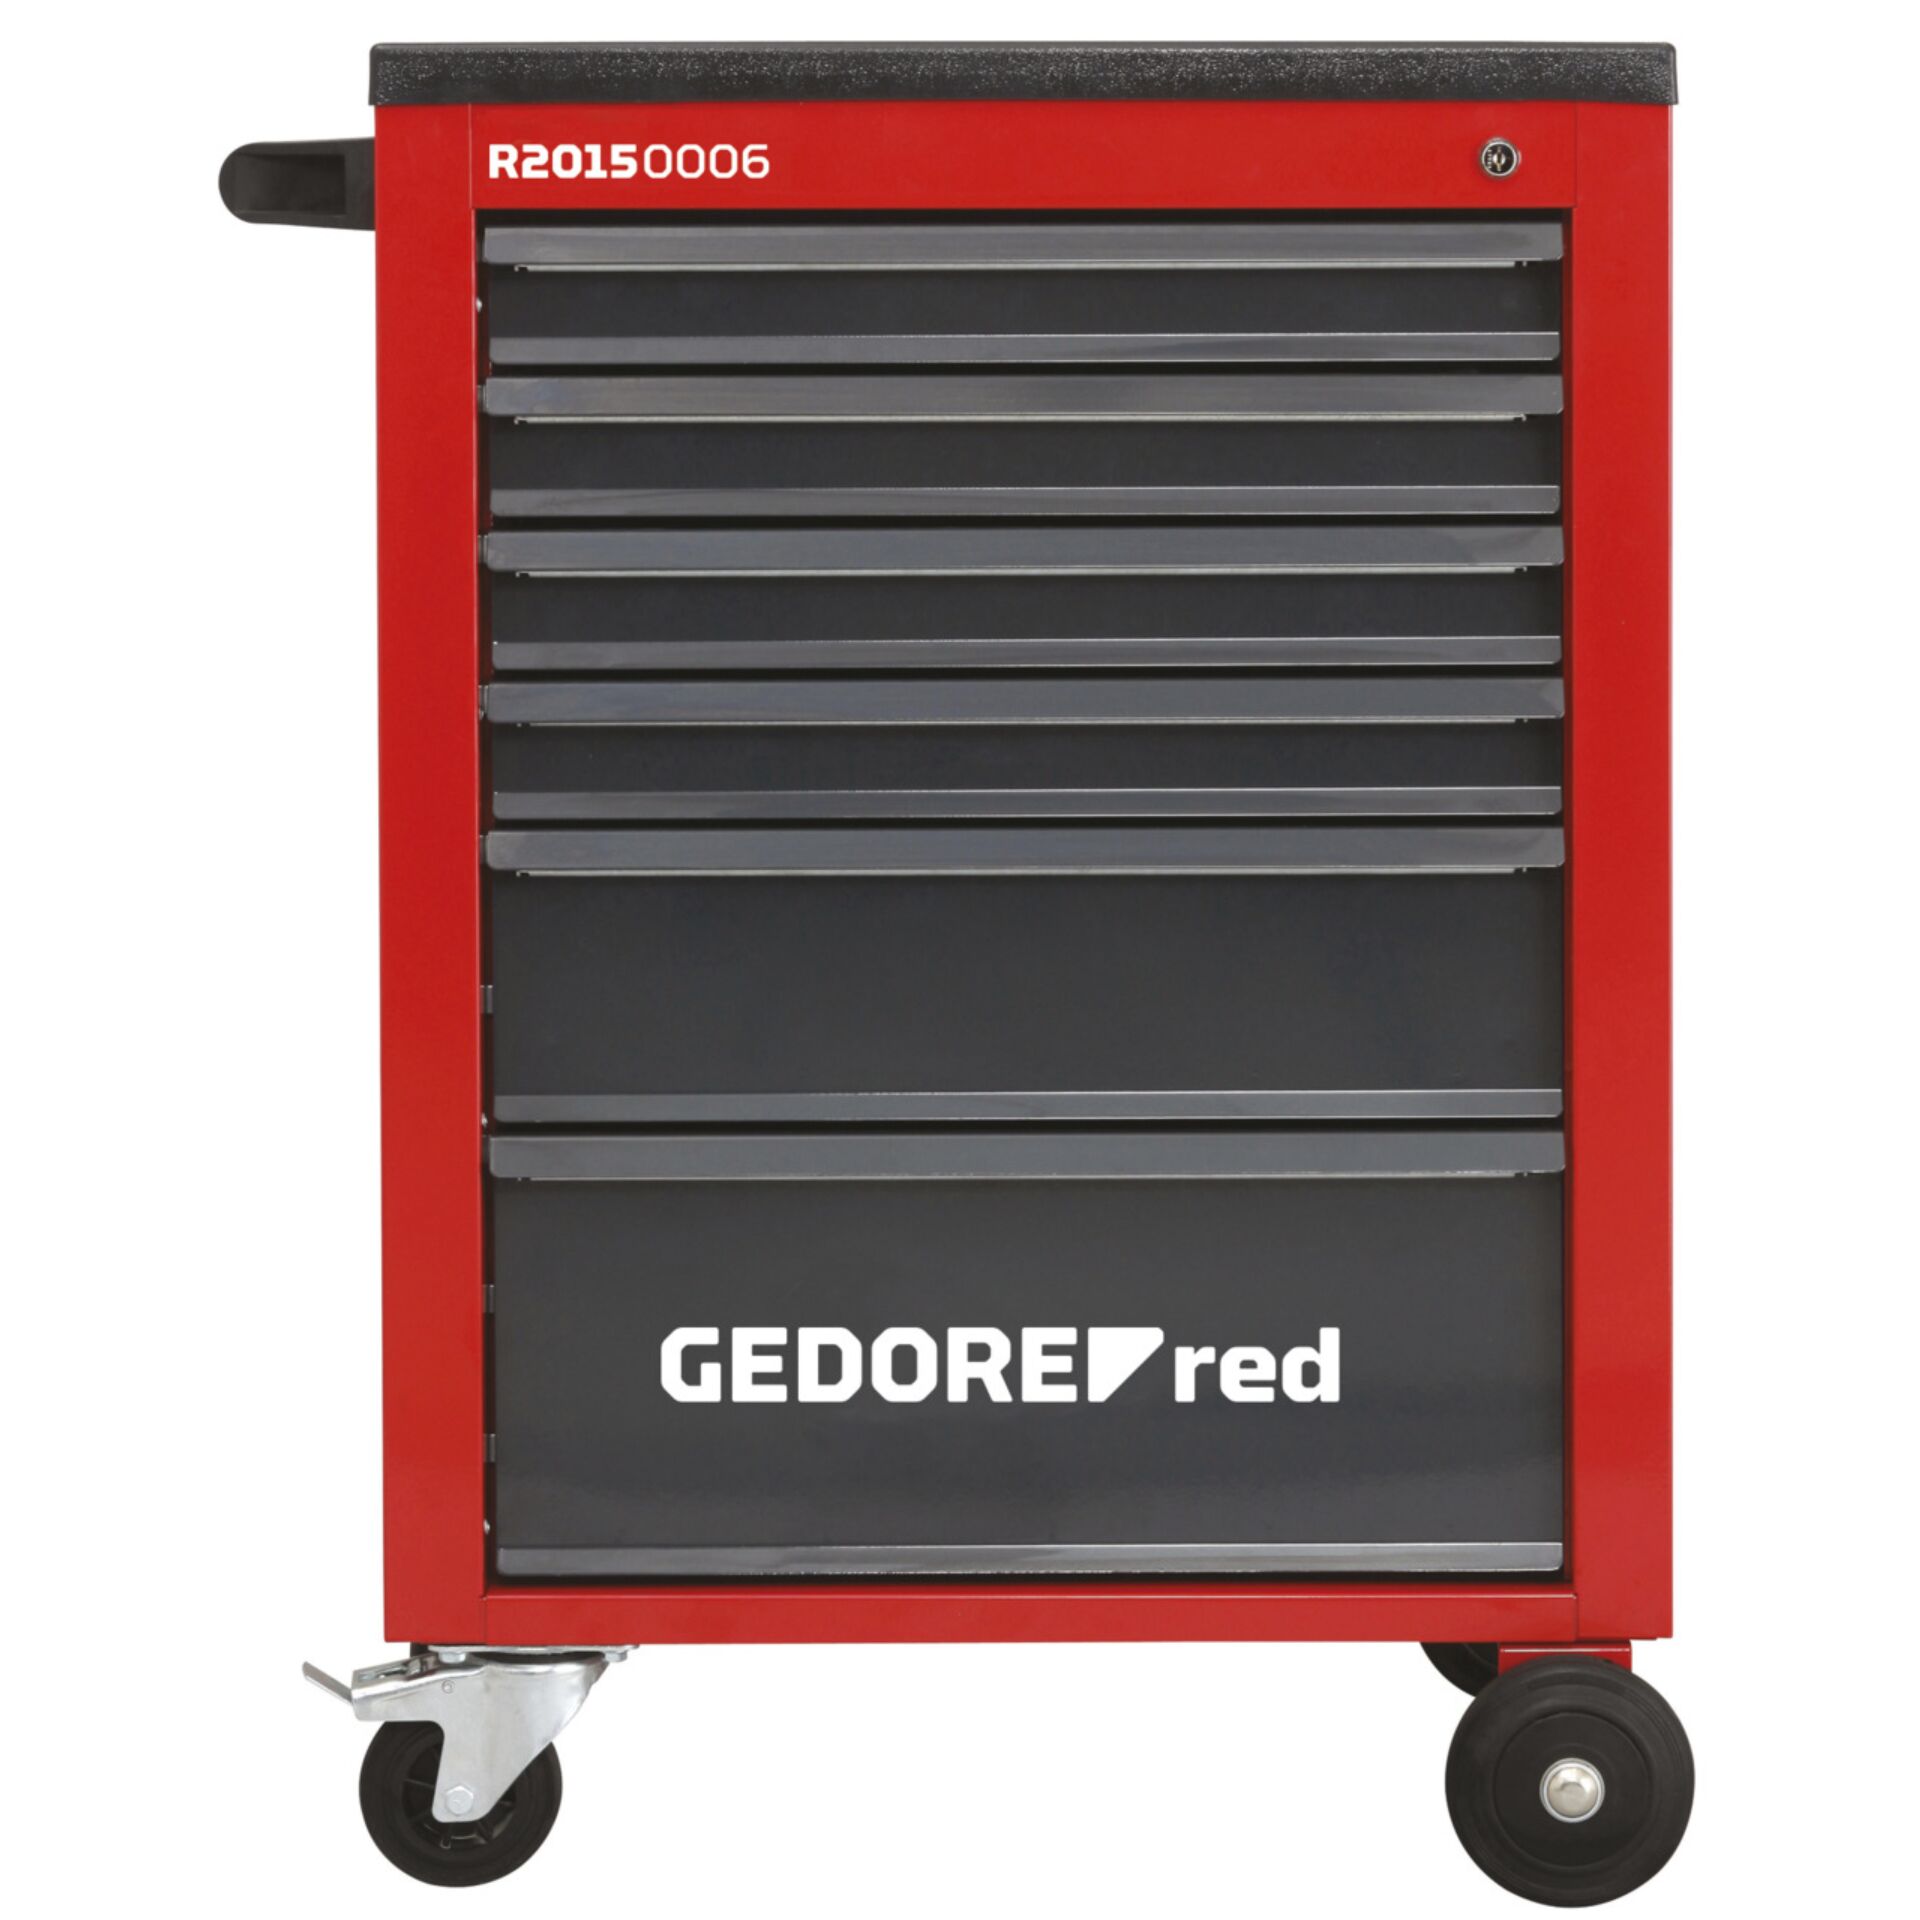 Gedore R20150006 tool cart